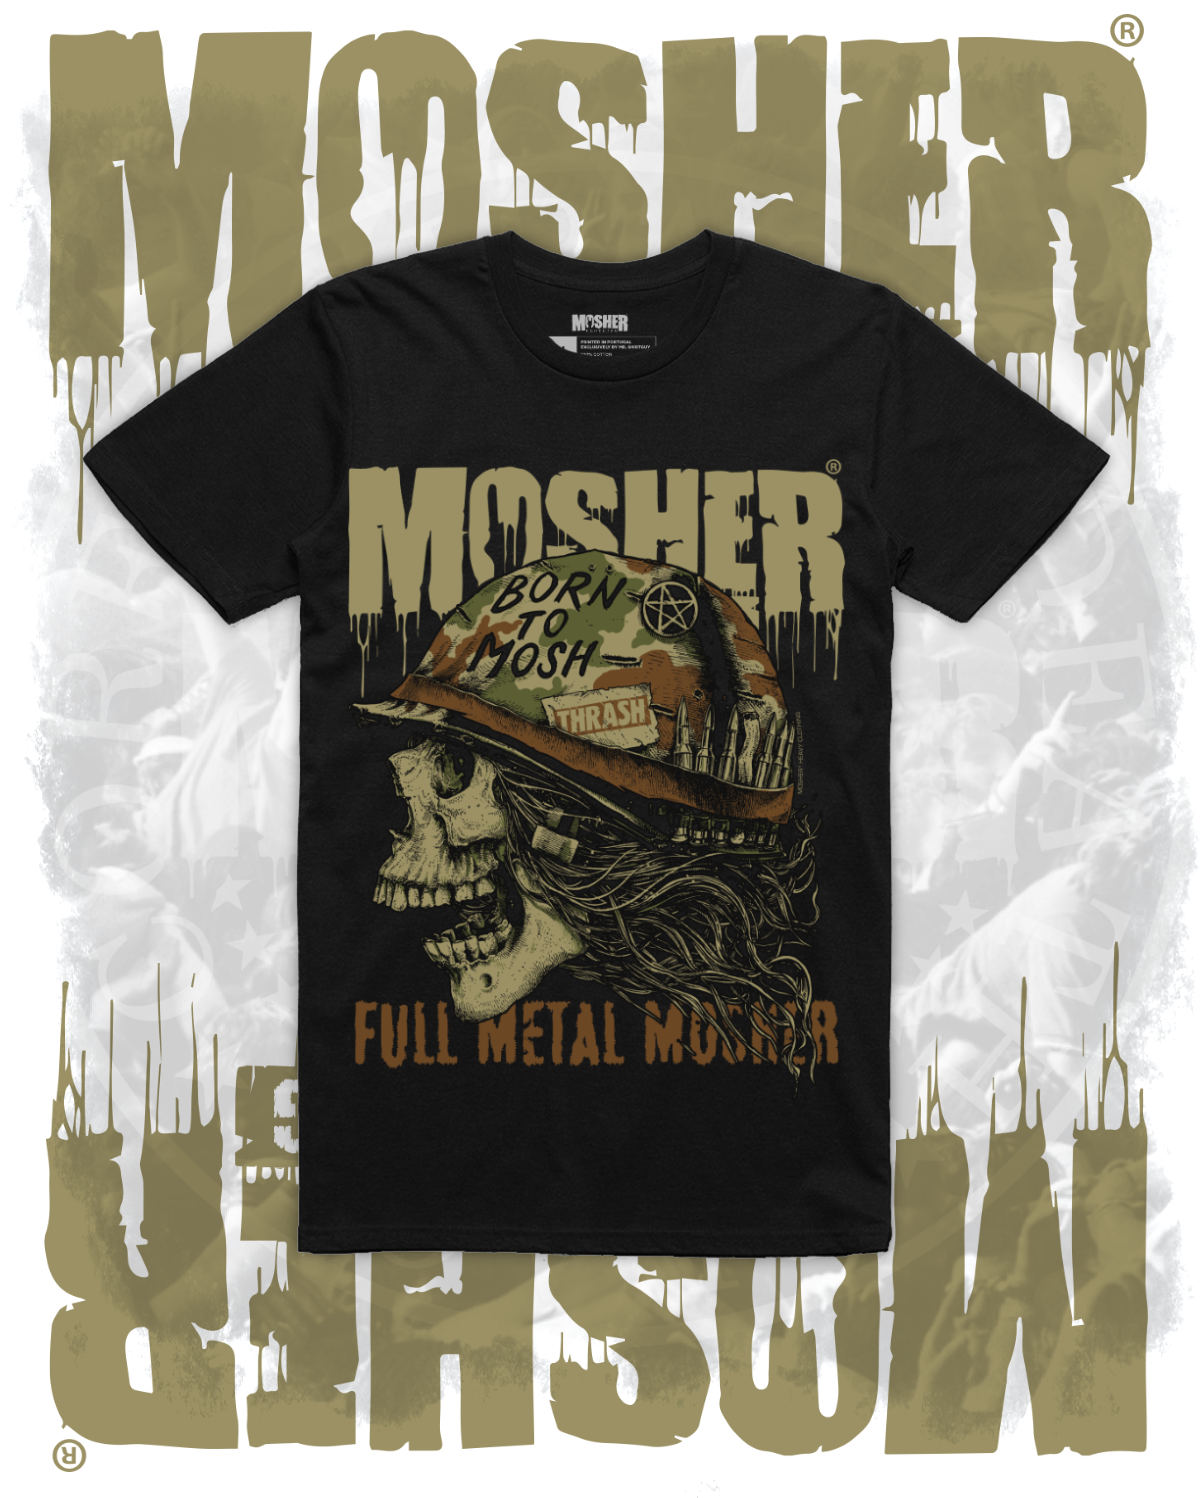 MOSHER HEAVY CLOTHING - "FULL METAL MOSHER" T-SHIRT